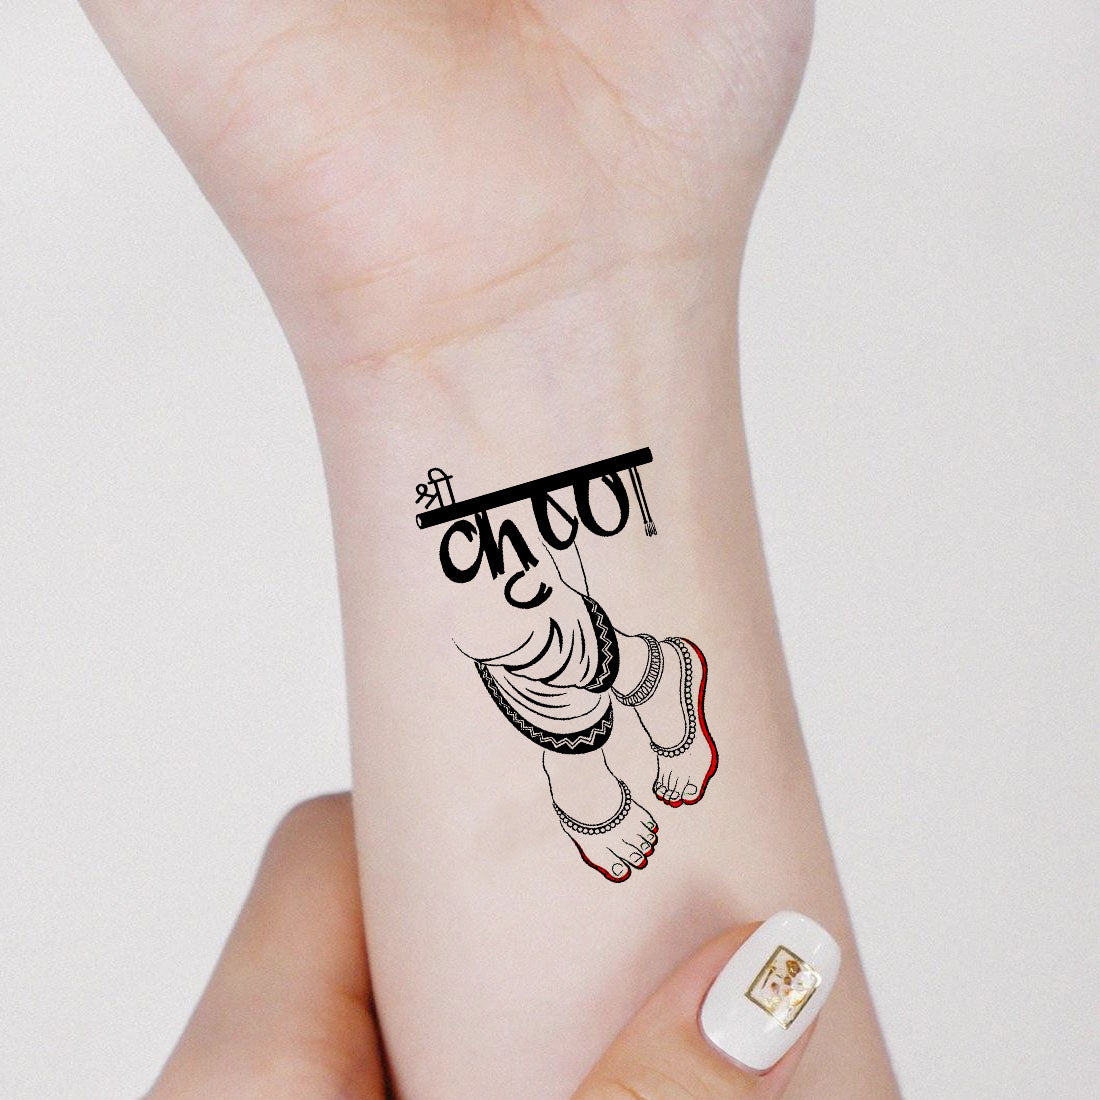 Discover 137+ sudarshan chakra tattoo latest